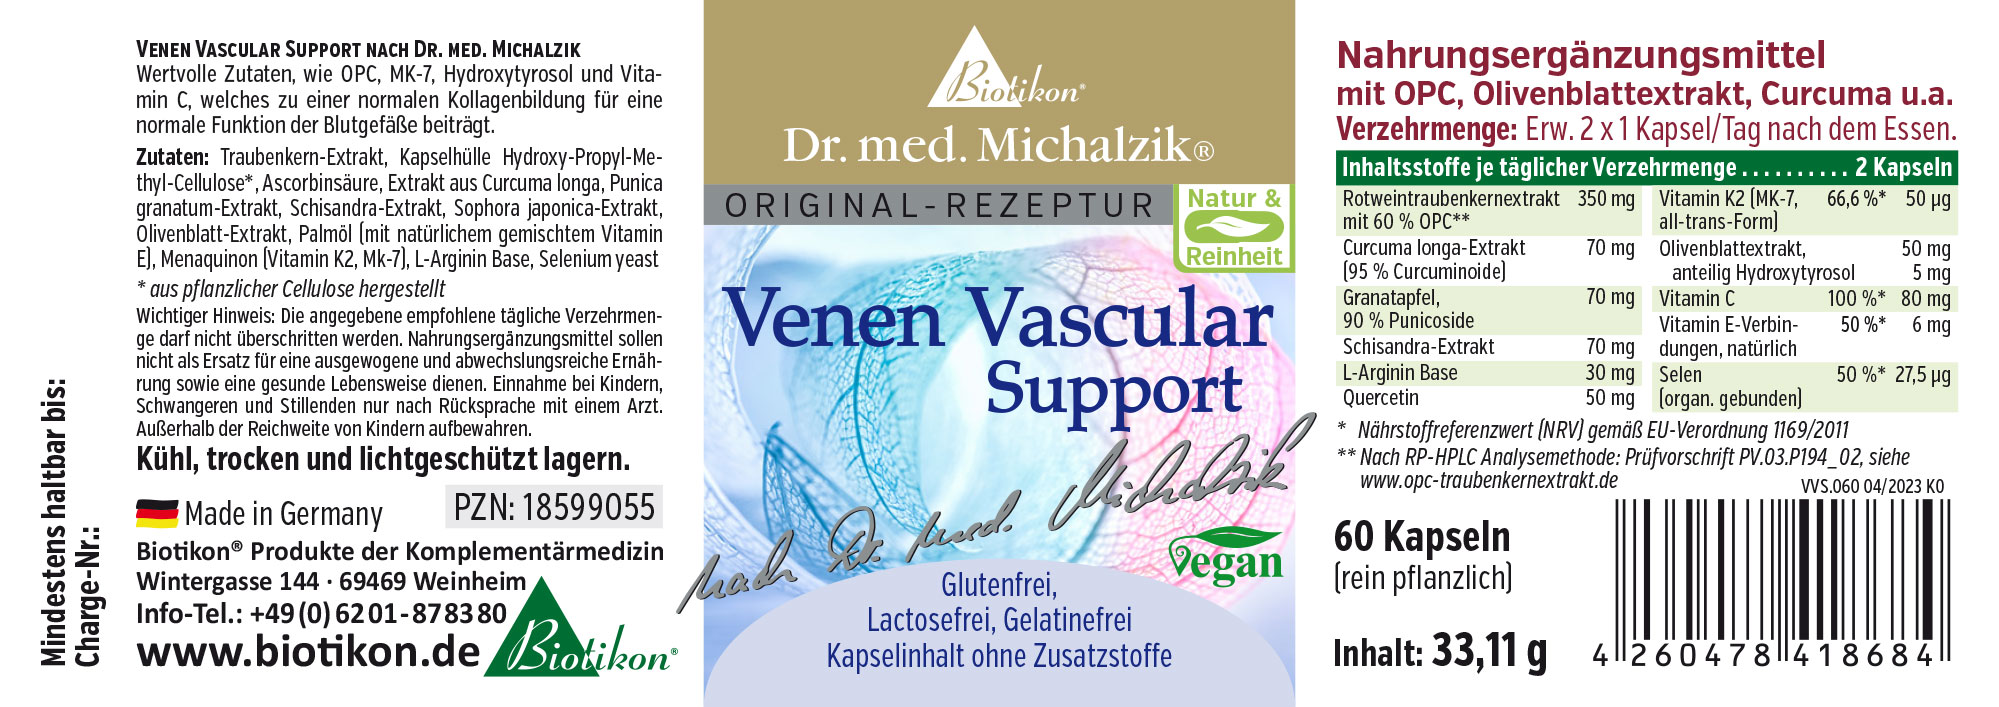 Venen Vascular Support nach Dr. med. Michalzik